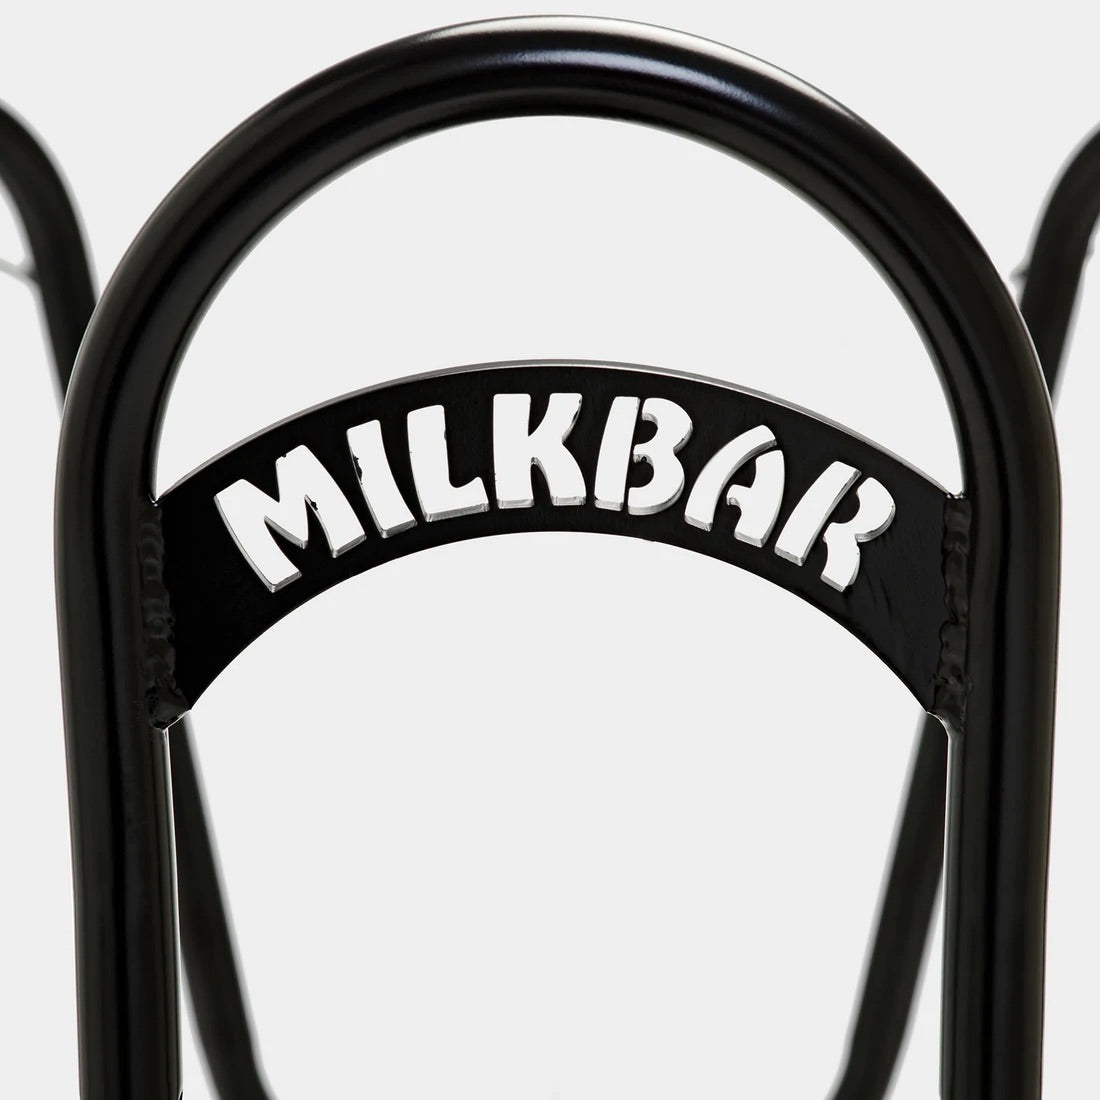 Milkbar 'Black Licorice' 26" Vintage Cruiser